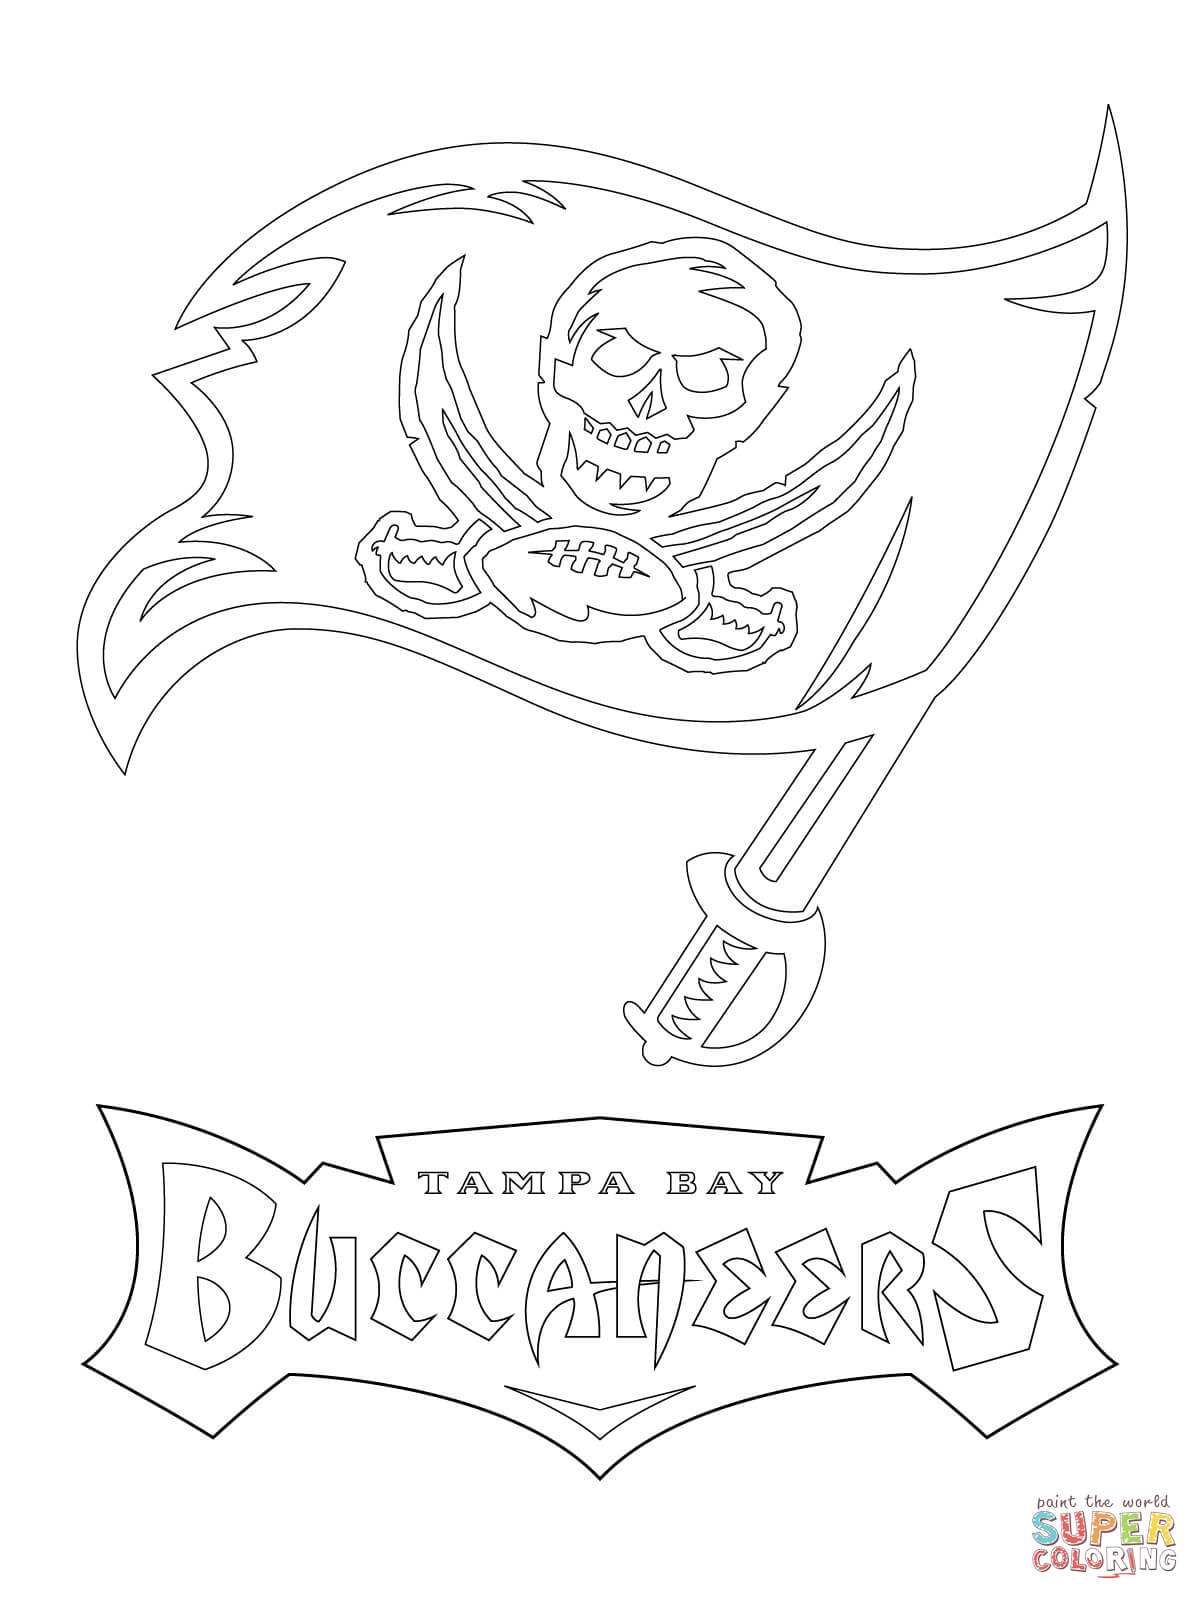 Tampa Bay Buccaneers Logo coloring page | Free Printable Coloring ...